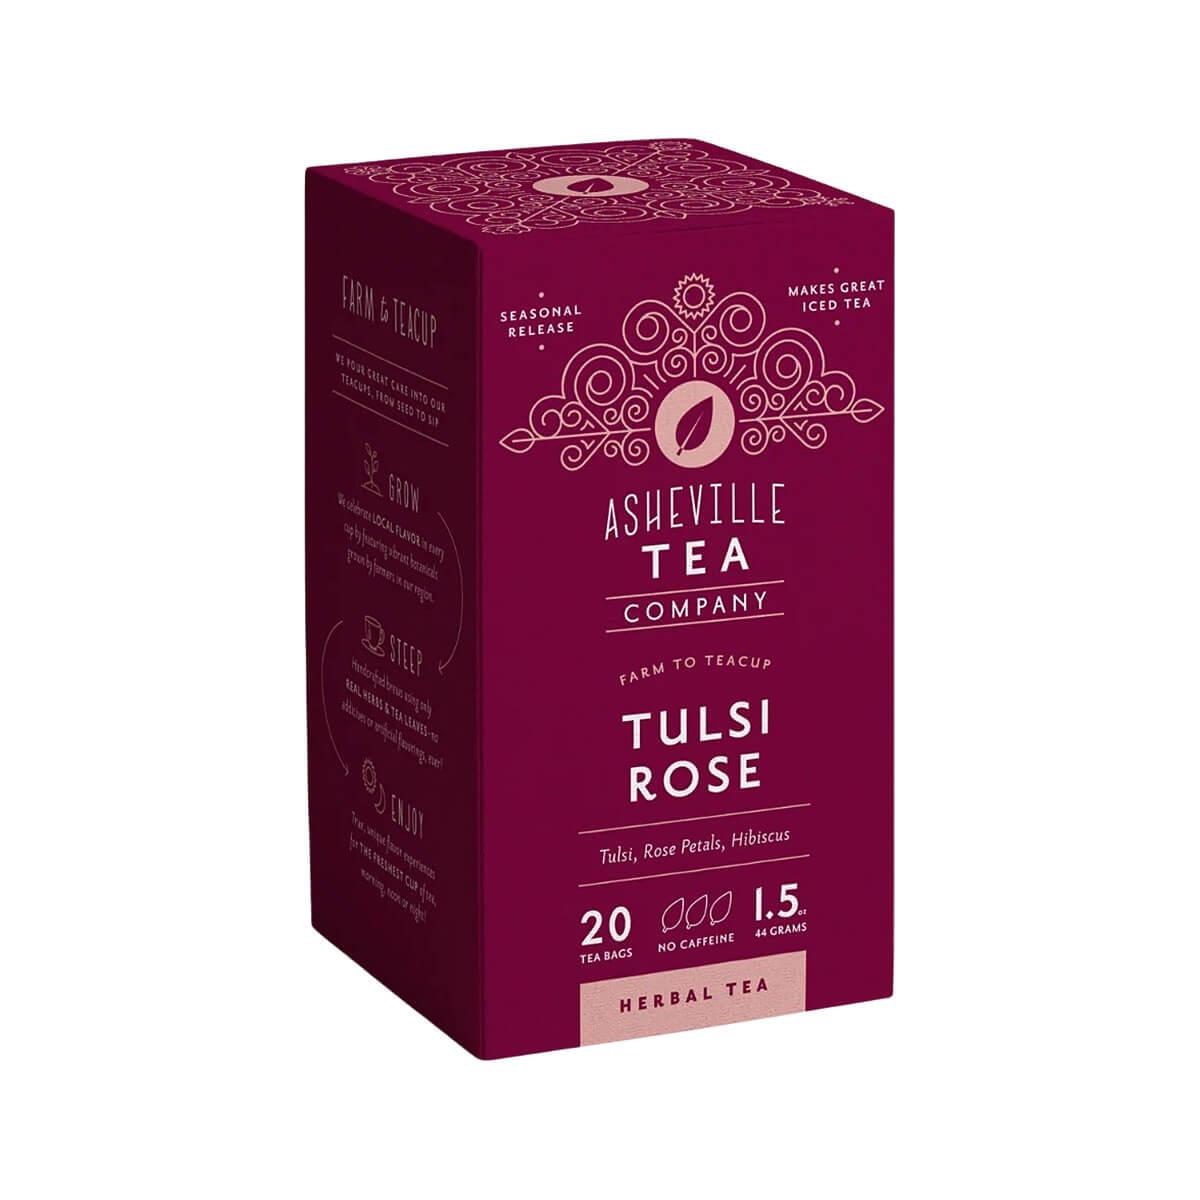  Tulsi Rose Tea - 20 Tea Bag Box